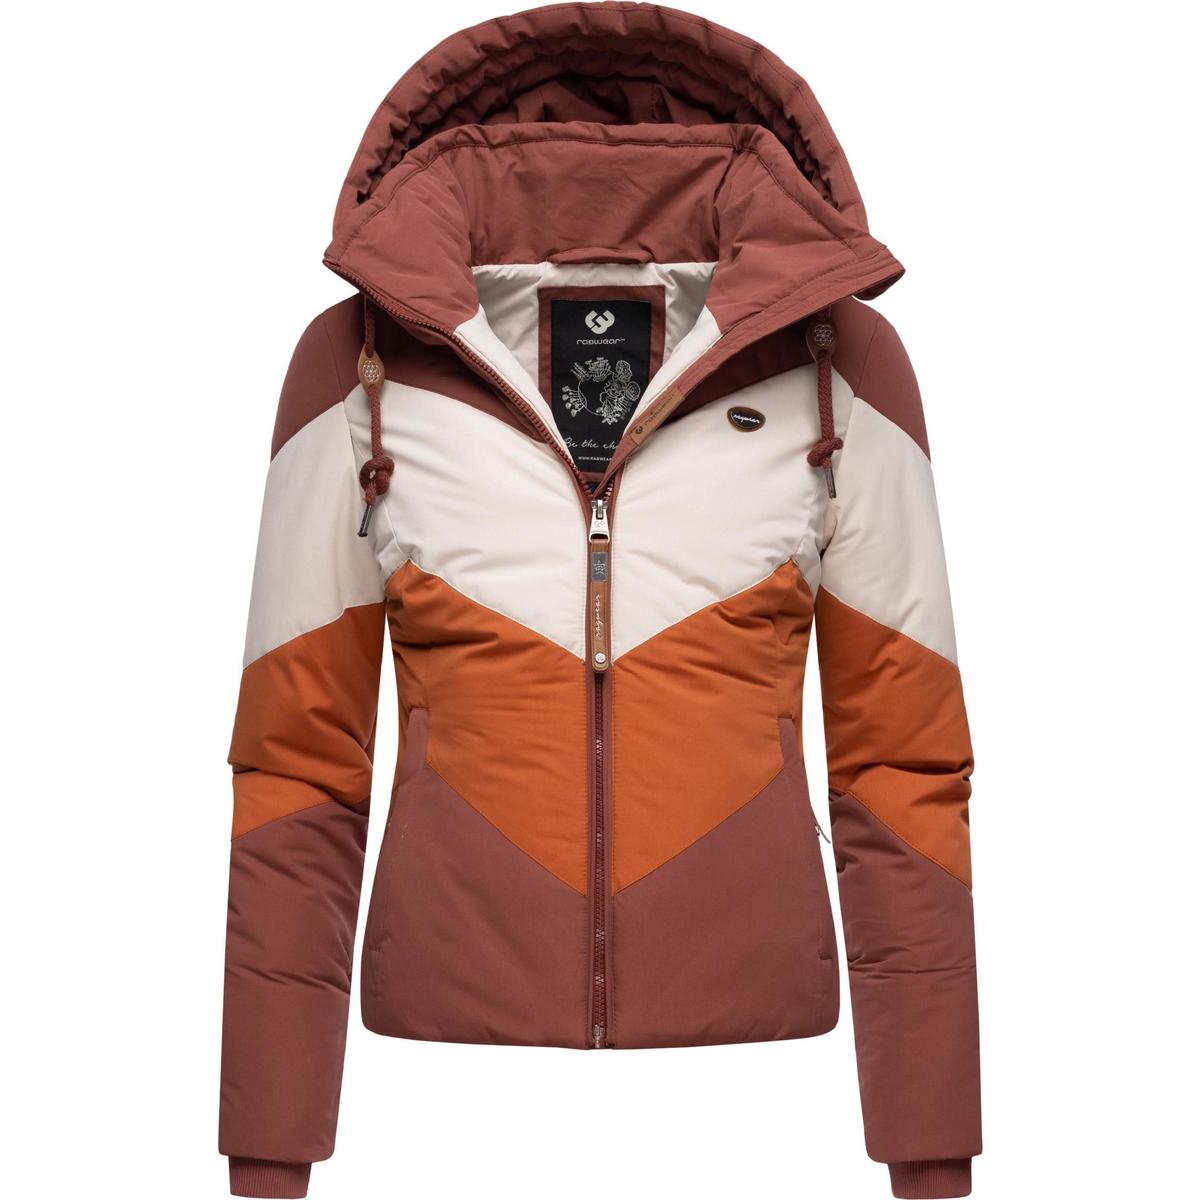 Ragwear Winterjacke Novva Block Braun Damen - € Kleidung 139,99 Jacken